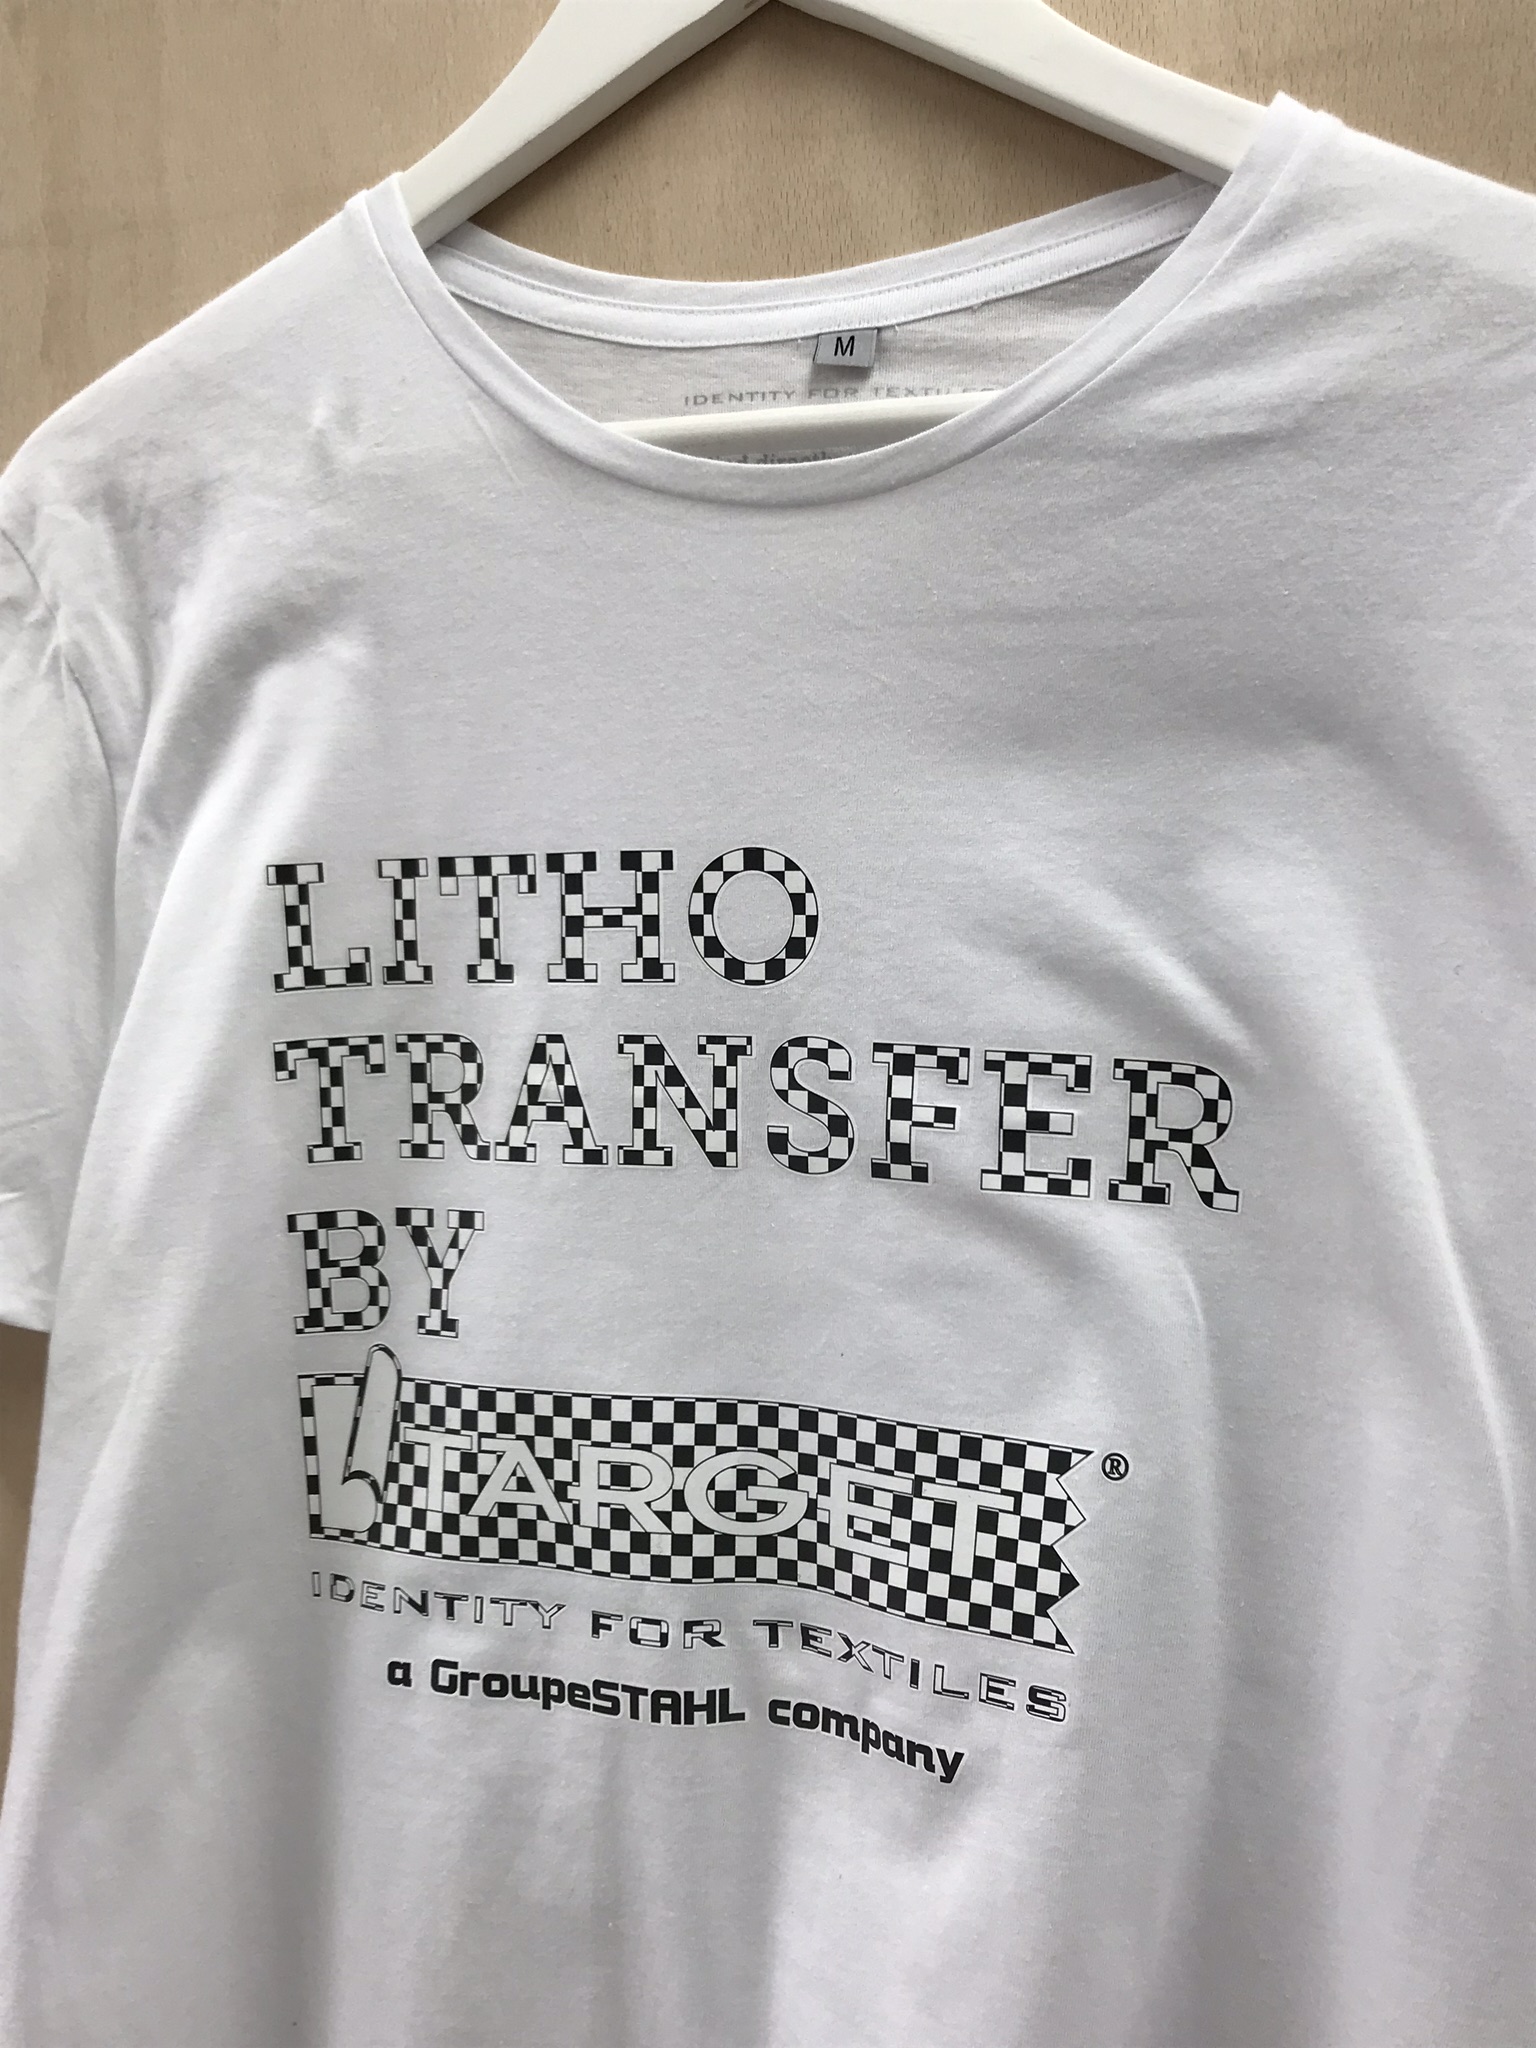 T Shirt Samples Uk Nils Stucki Kieferorthopade - how to get free t shirts on roblox 2019 nils stucki kieferorthopade